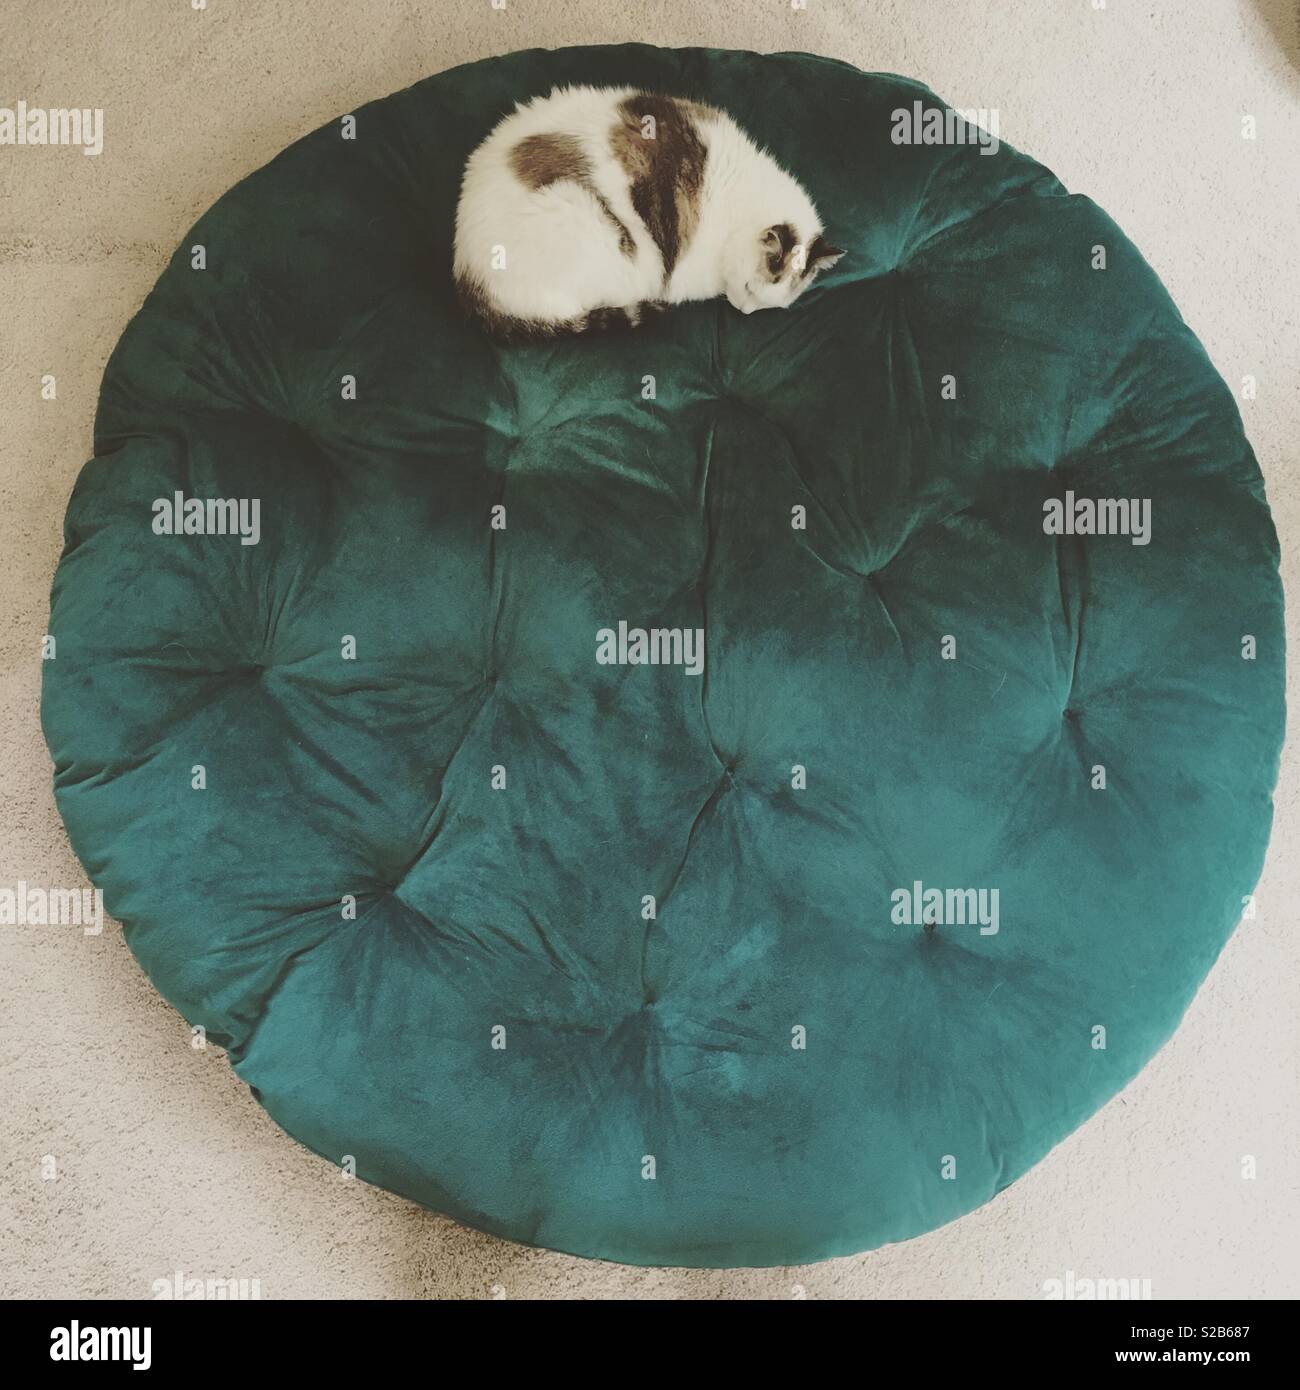 A cat sleeping on a circular cushion. Stock Photo